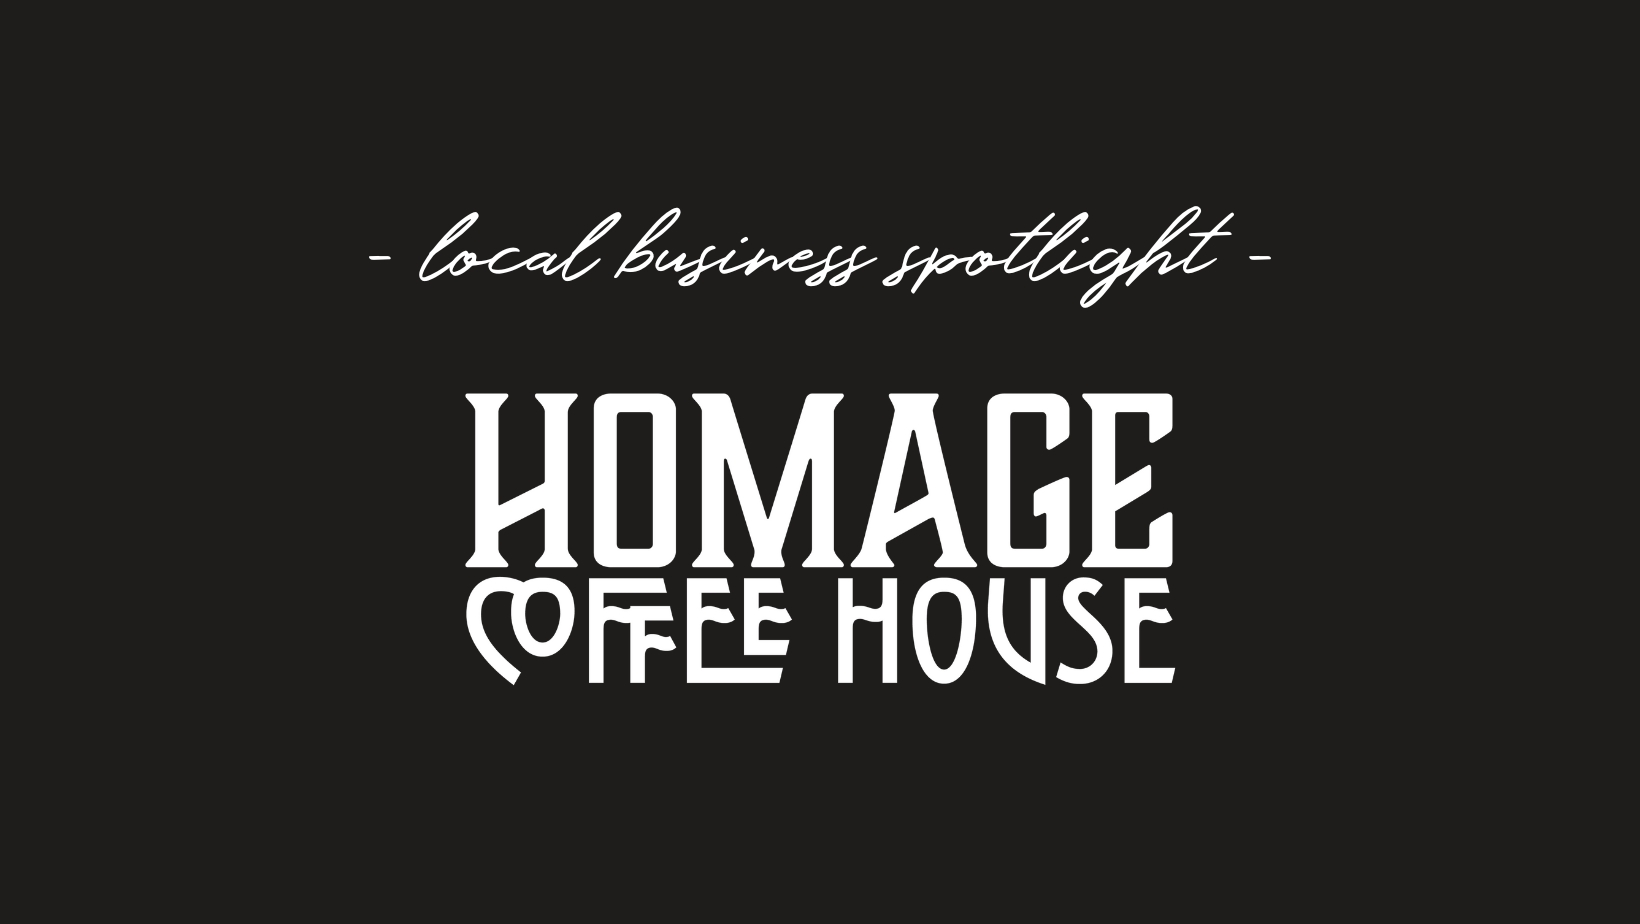 Homage Coffee House Logo